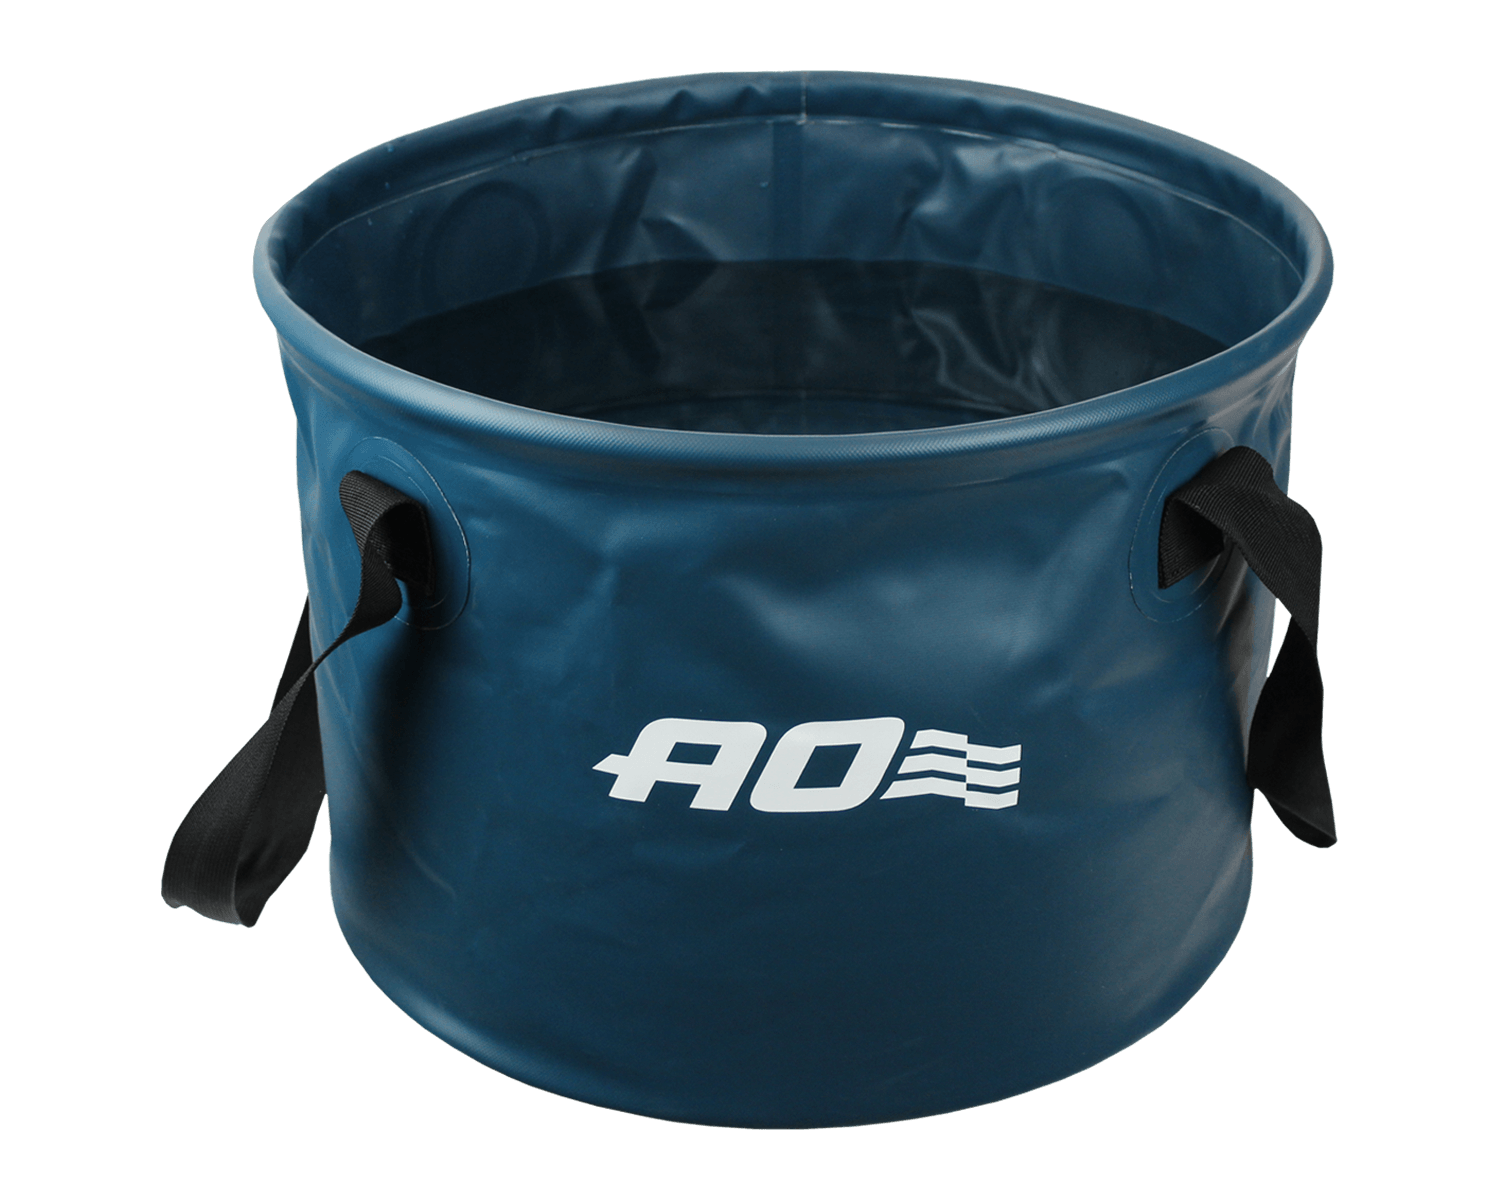 Foldable Bucket 1 Pc